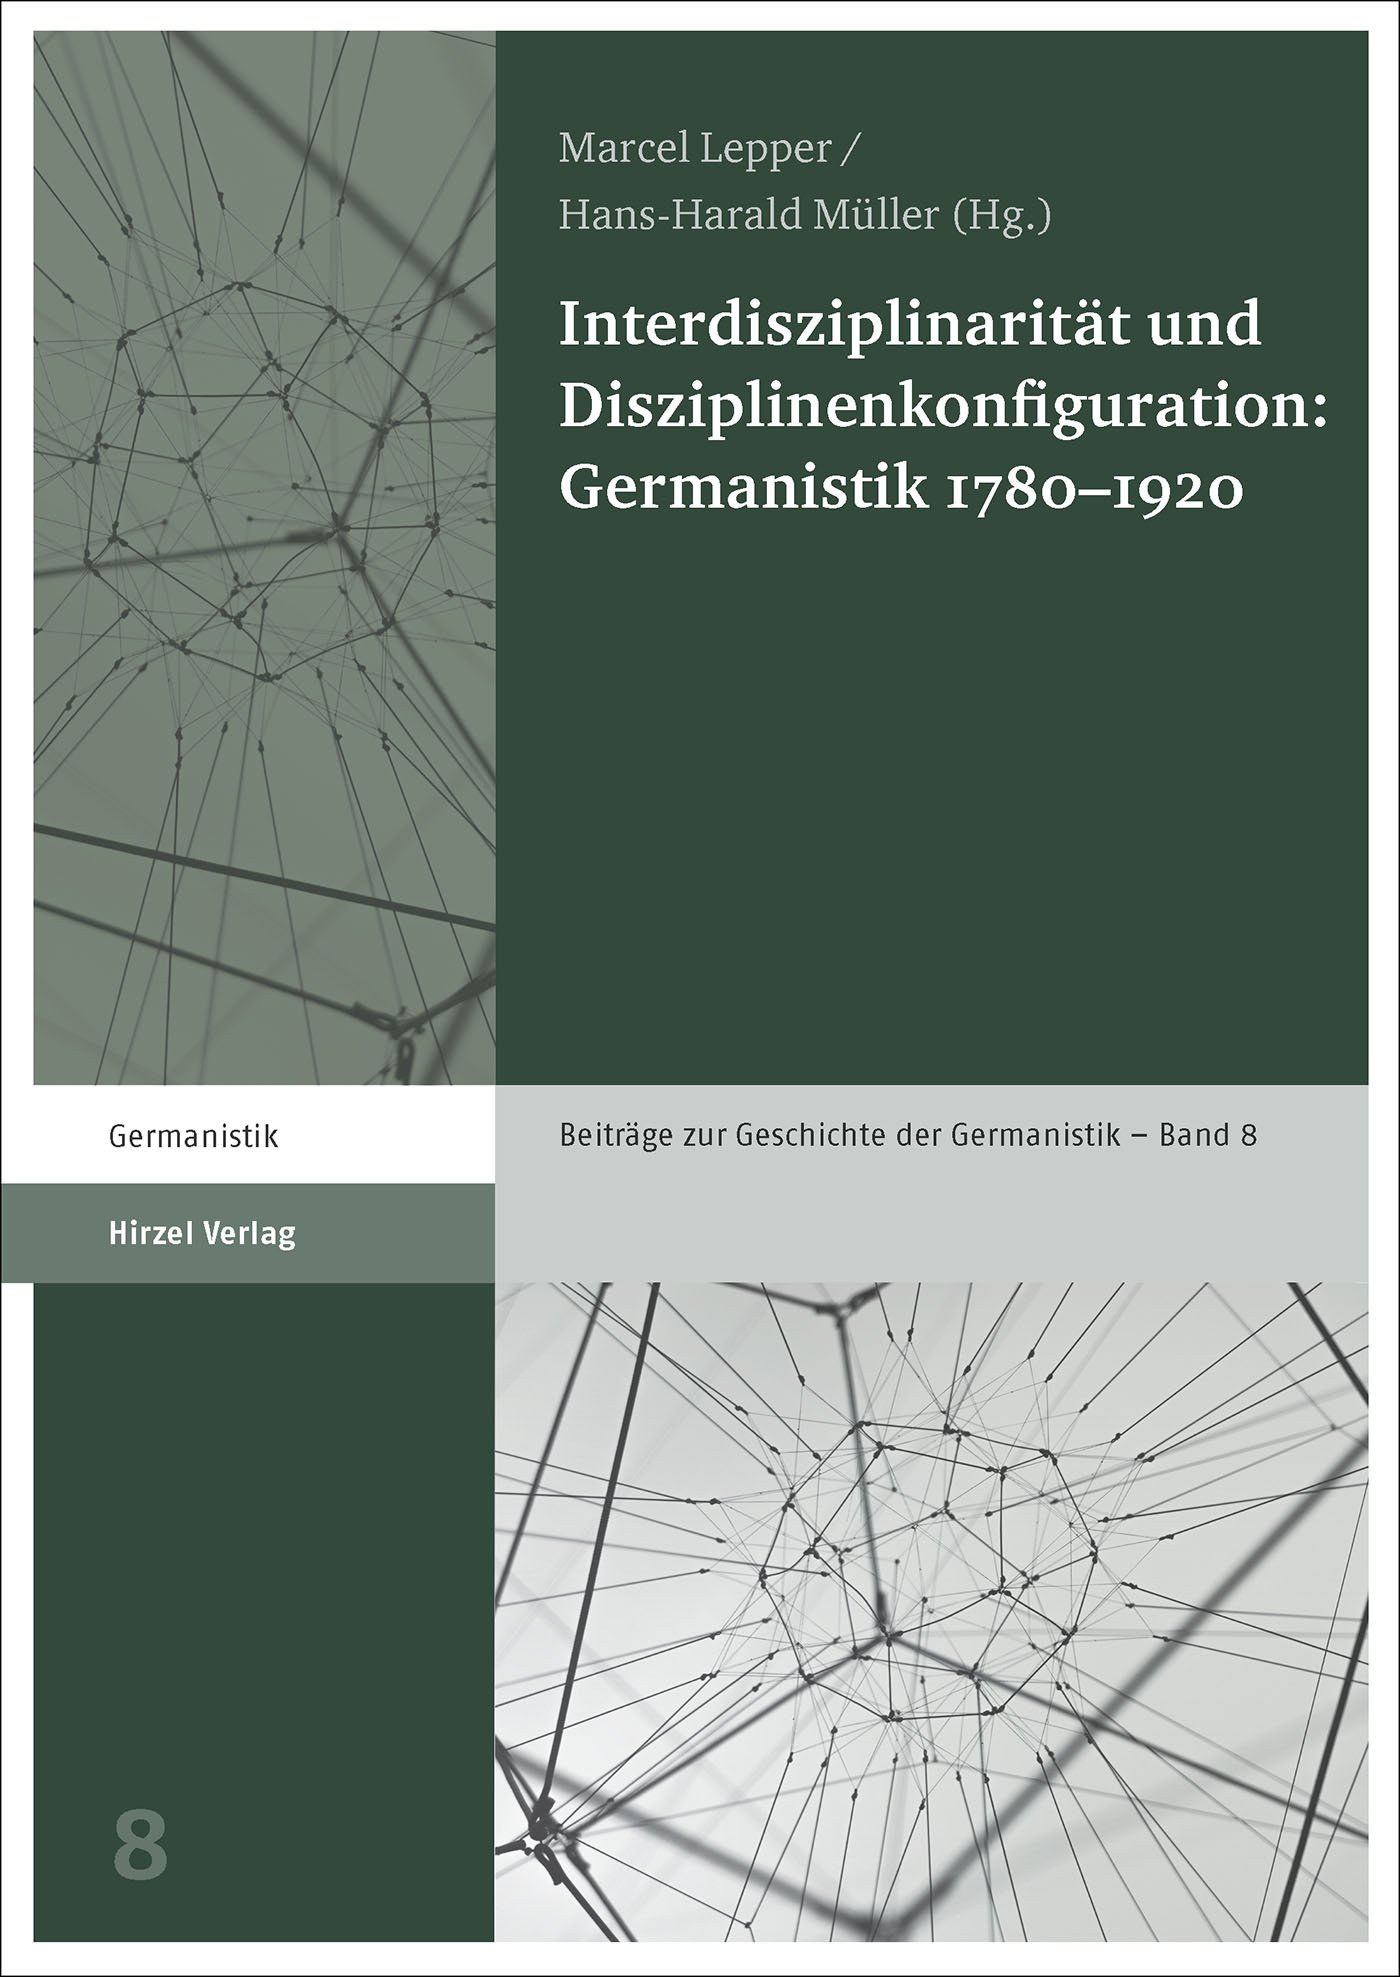 Interdisziplinarität und Disziplinenkonfiguration: Germanistik 1780–1920